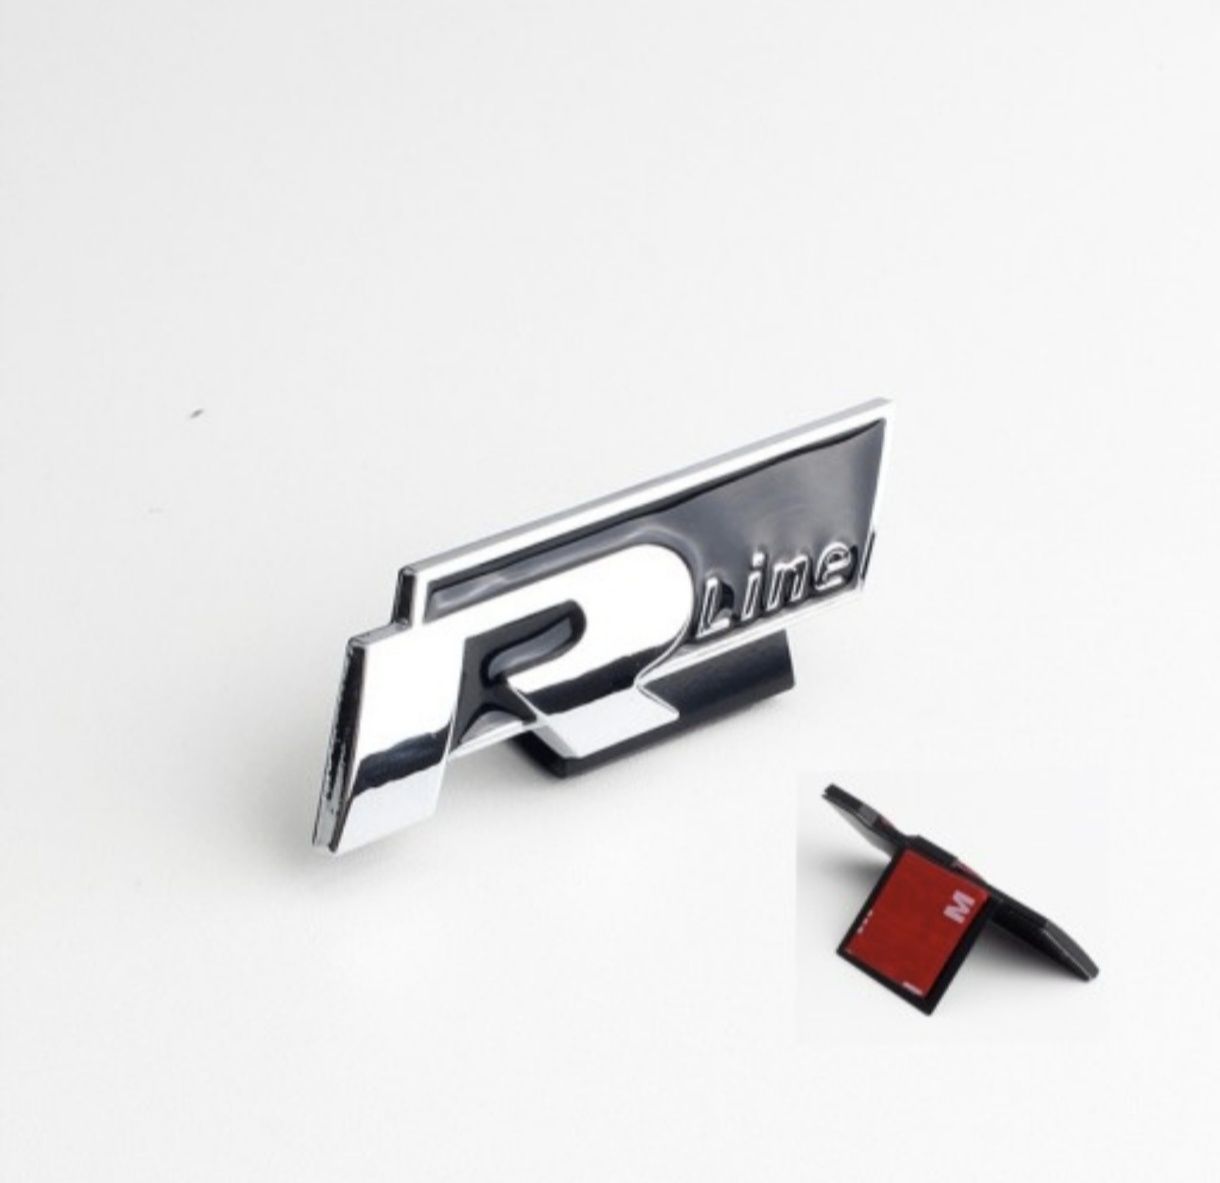 Emblemat logo znaczek R Line